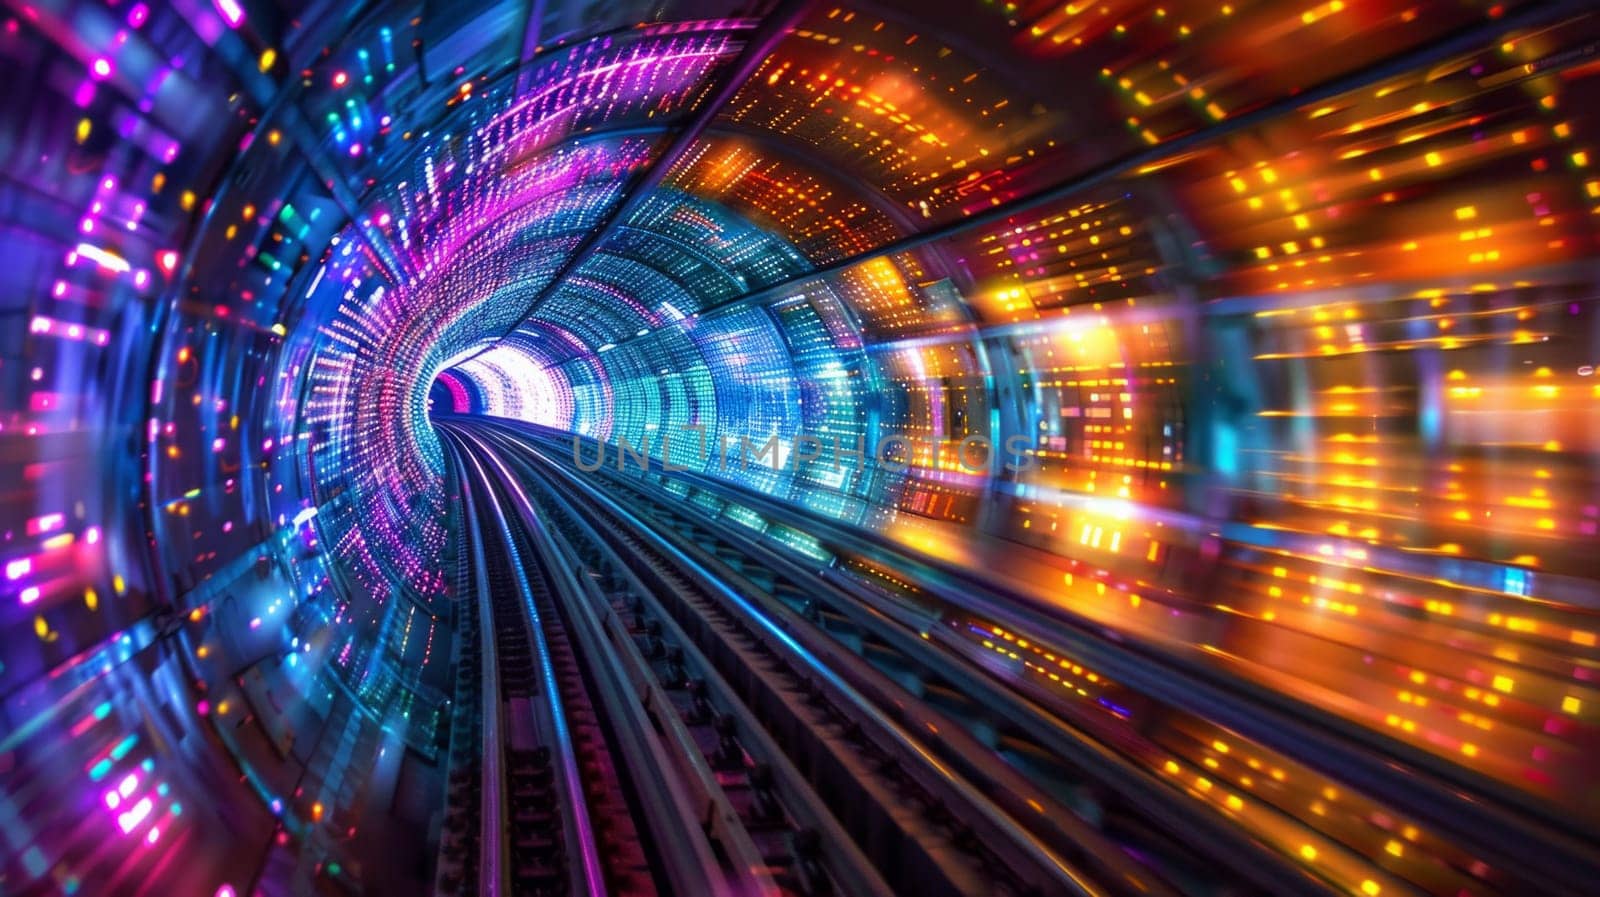 Futuristic multicolored tunnel background illustrating fast communications.